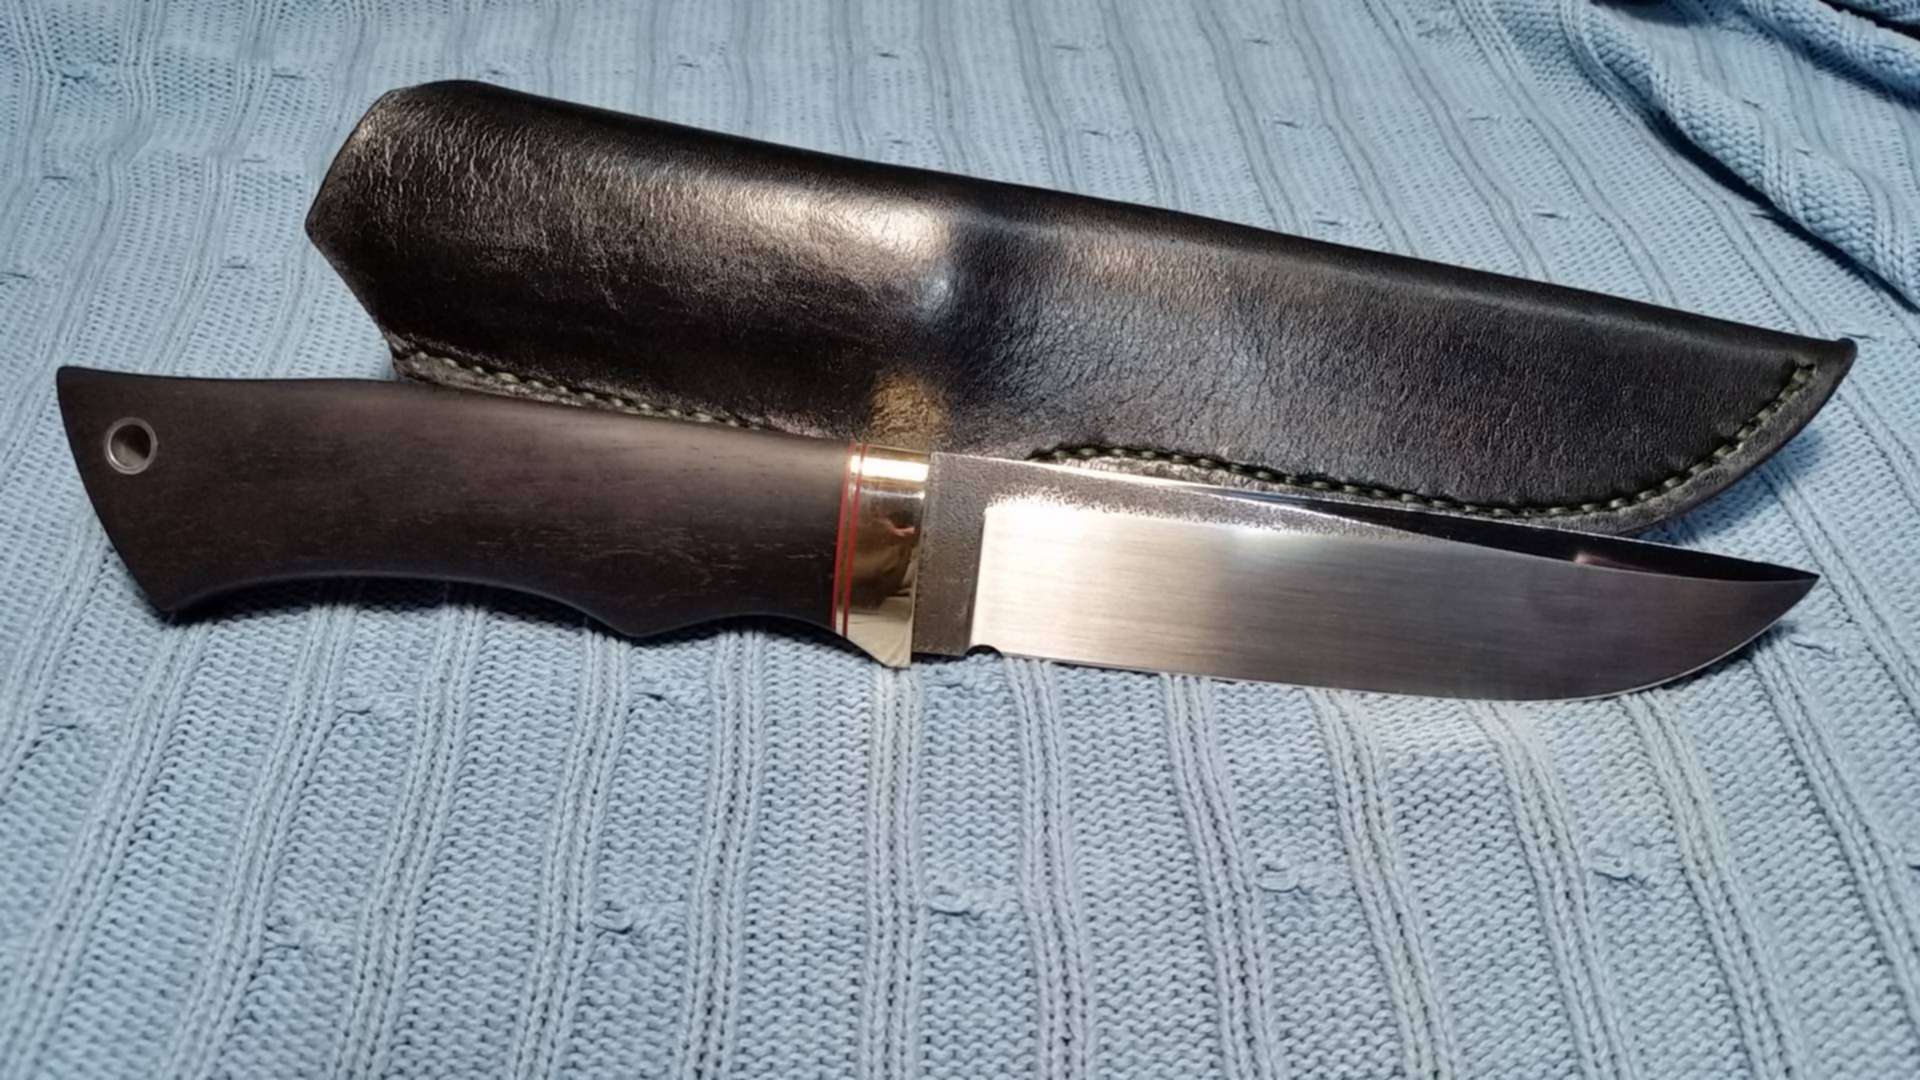 Купить охотничий нож на авито. Нож Bohler n690. Нож "Karambit" Bohler-Uddeholm n690 Black g-10 479 от Fox Knives. Ножи на авито Липецк. Авита нож для кожи купить.